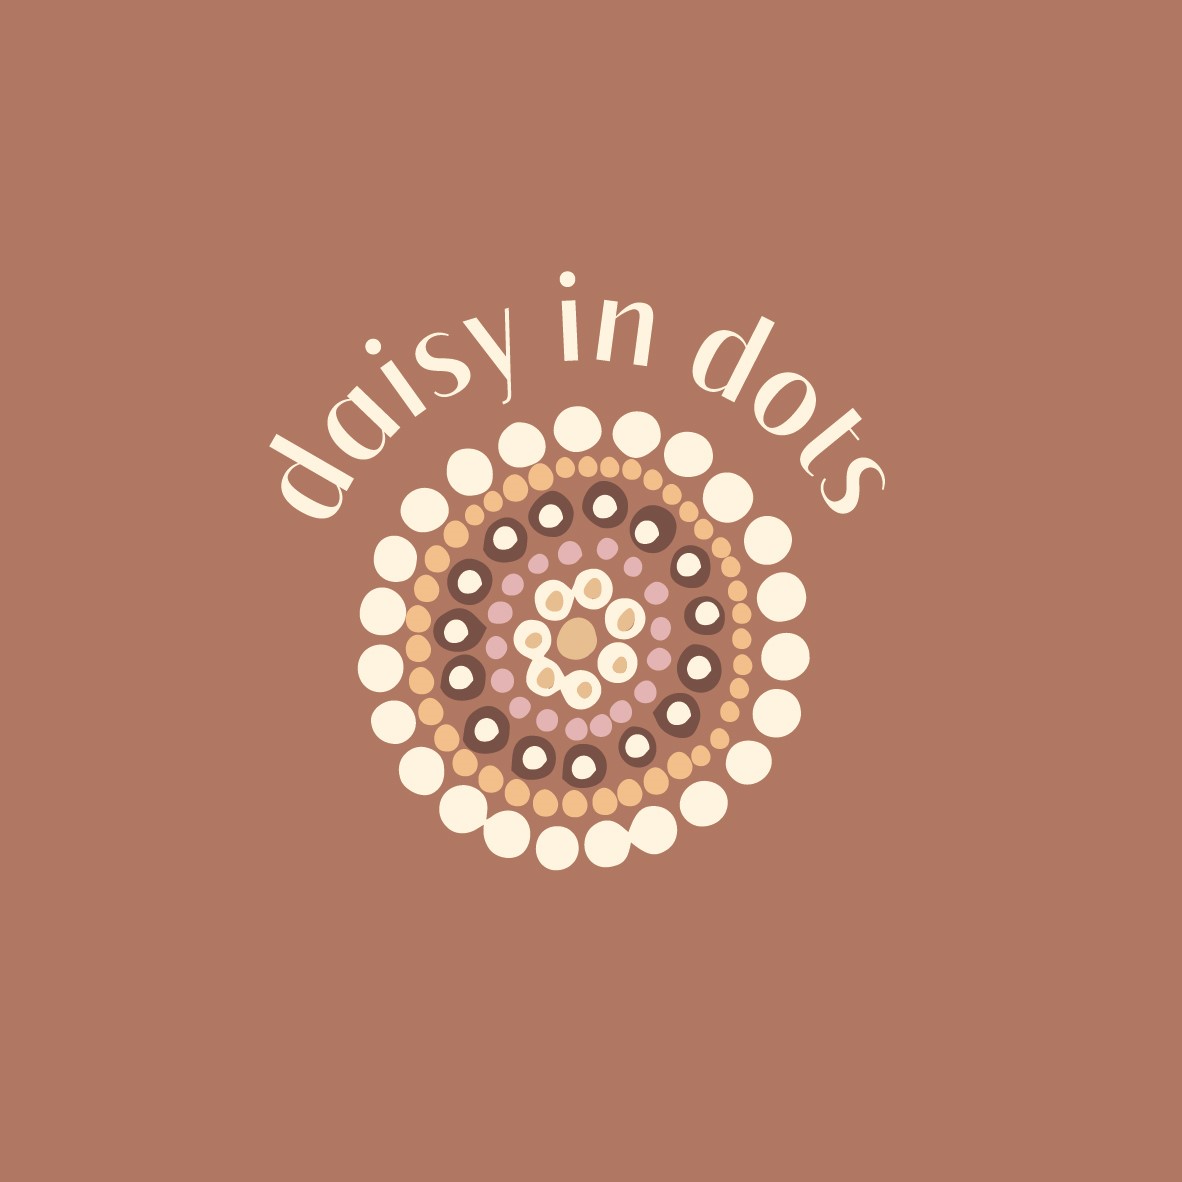 Australian, Typography, Indigenous, Fashion, Roofus Australia, DG Designs, Daisy in Dots Artworks